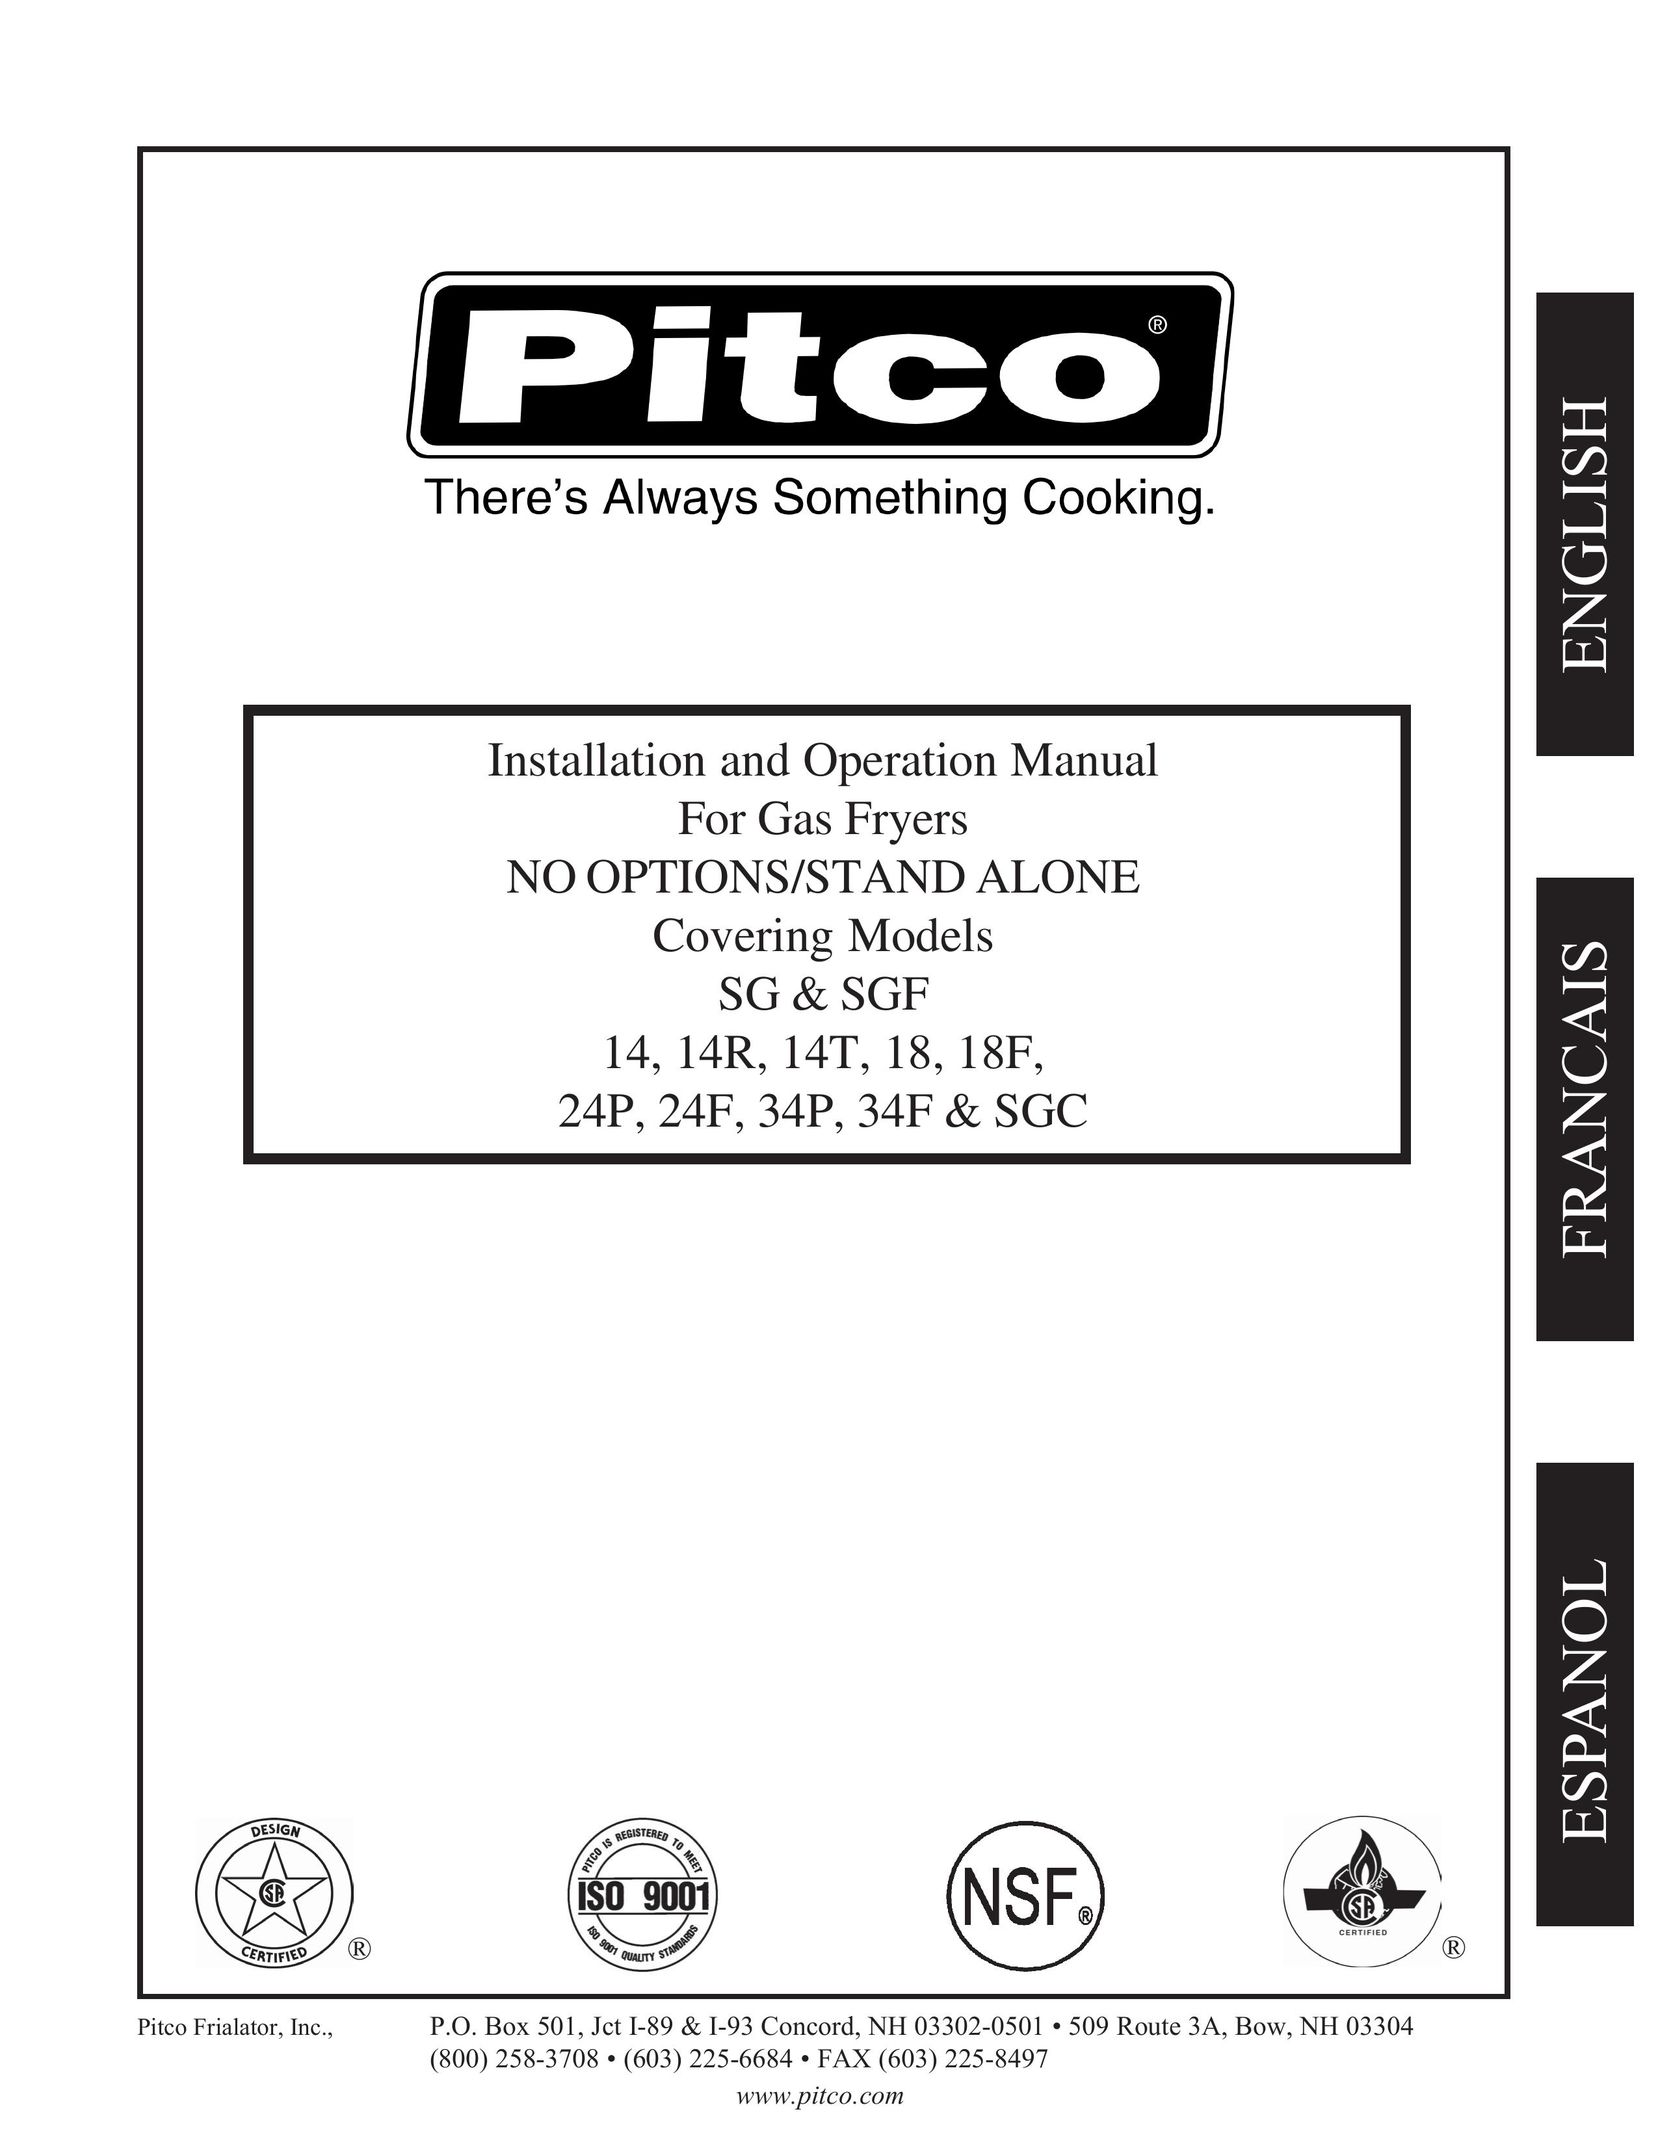 Pitco Frialator 18F Fryer User Manual